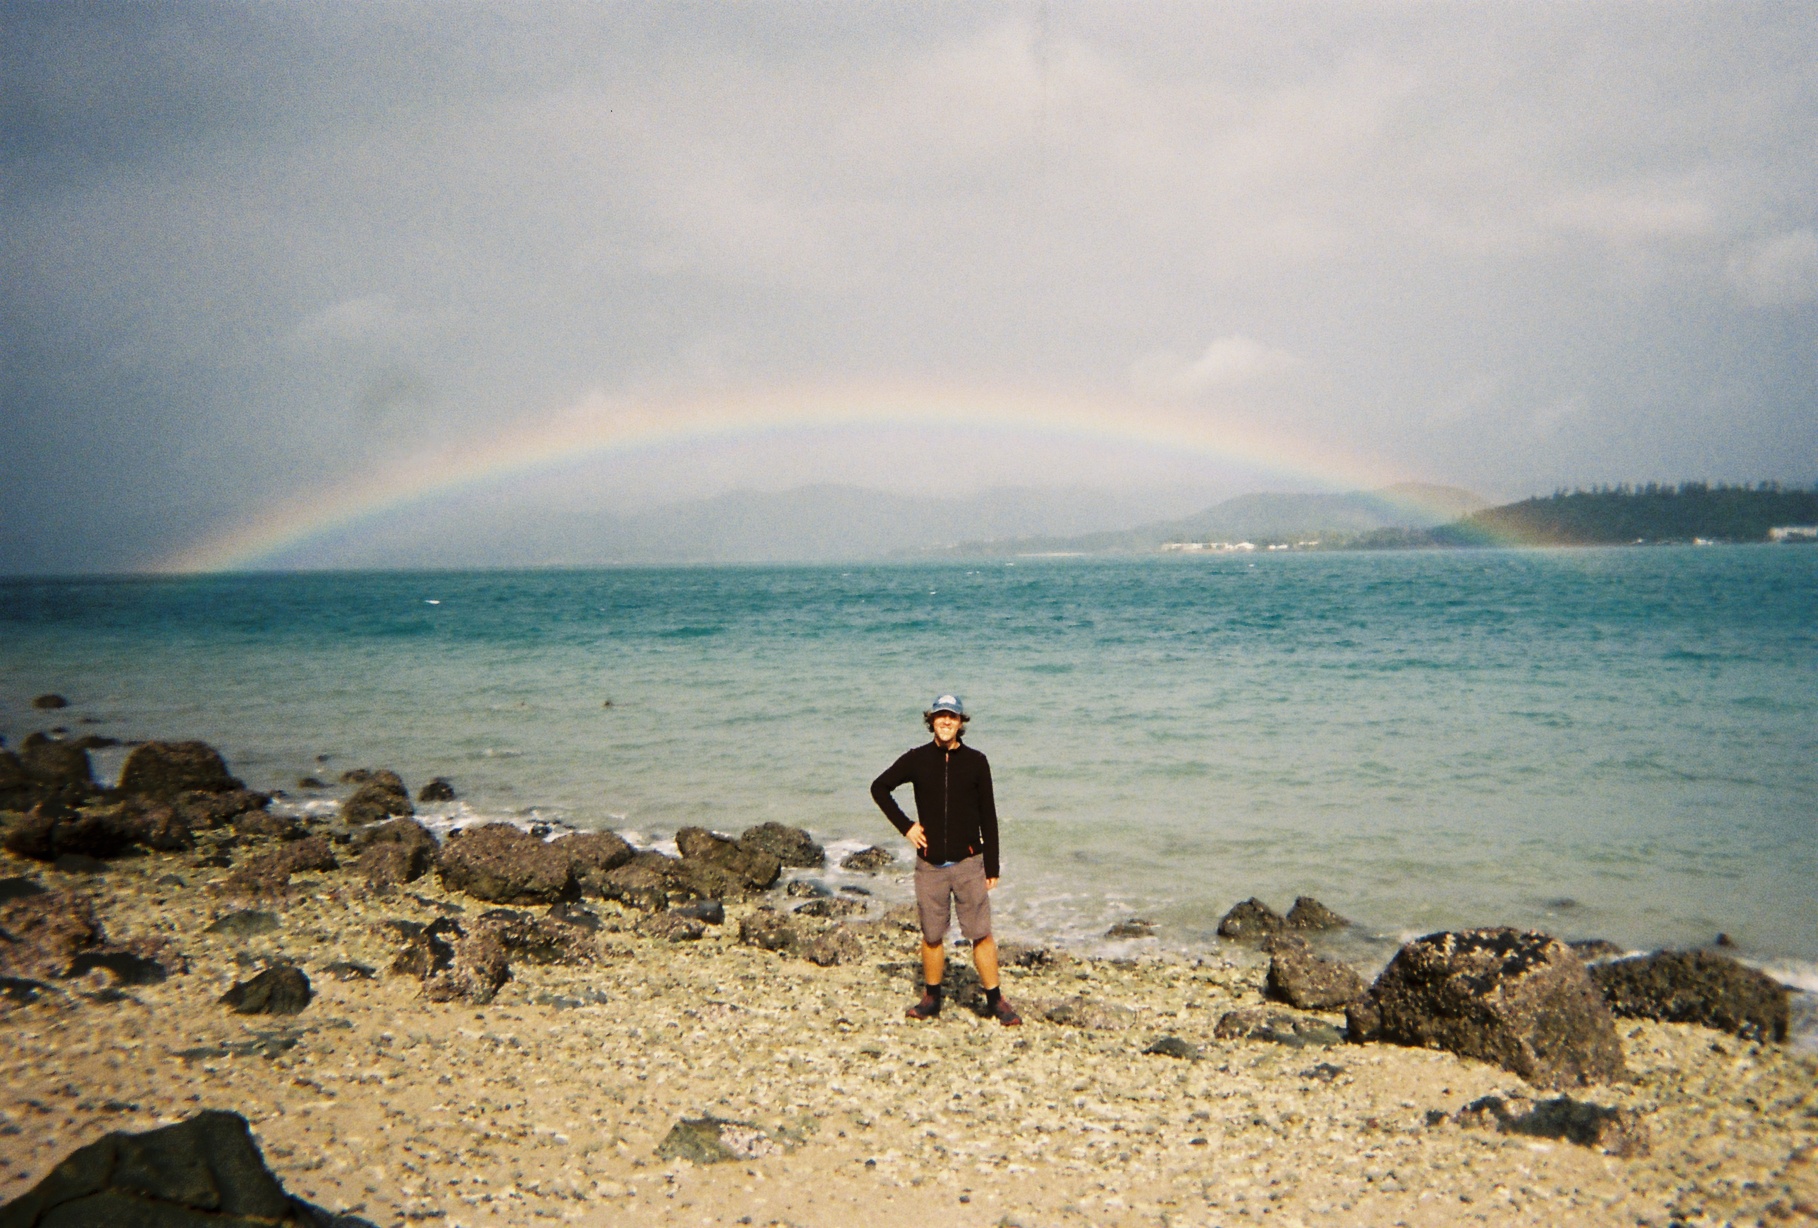 Yentl on South Molle Island under rainbow